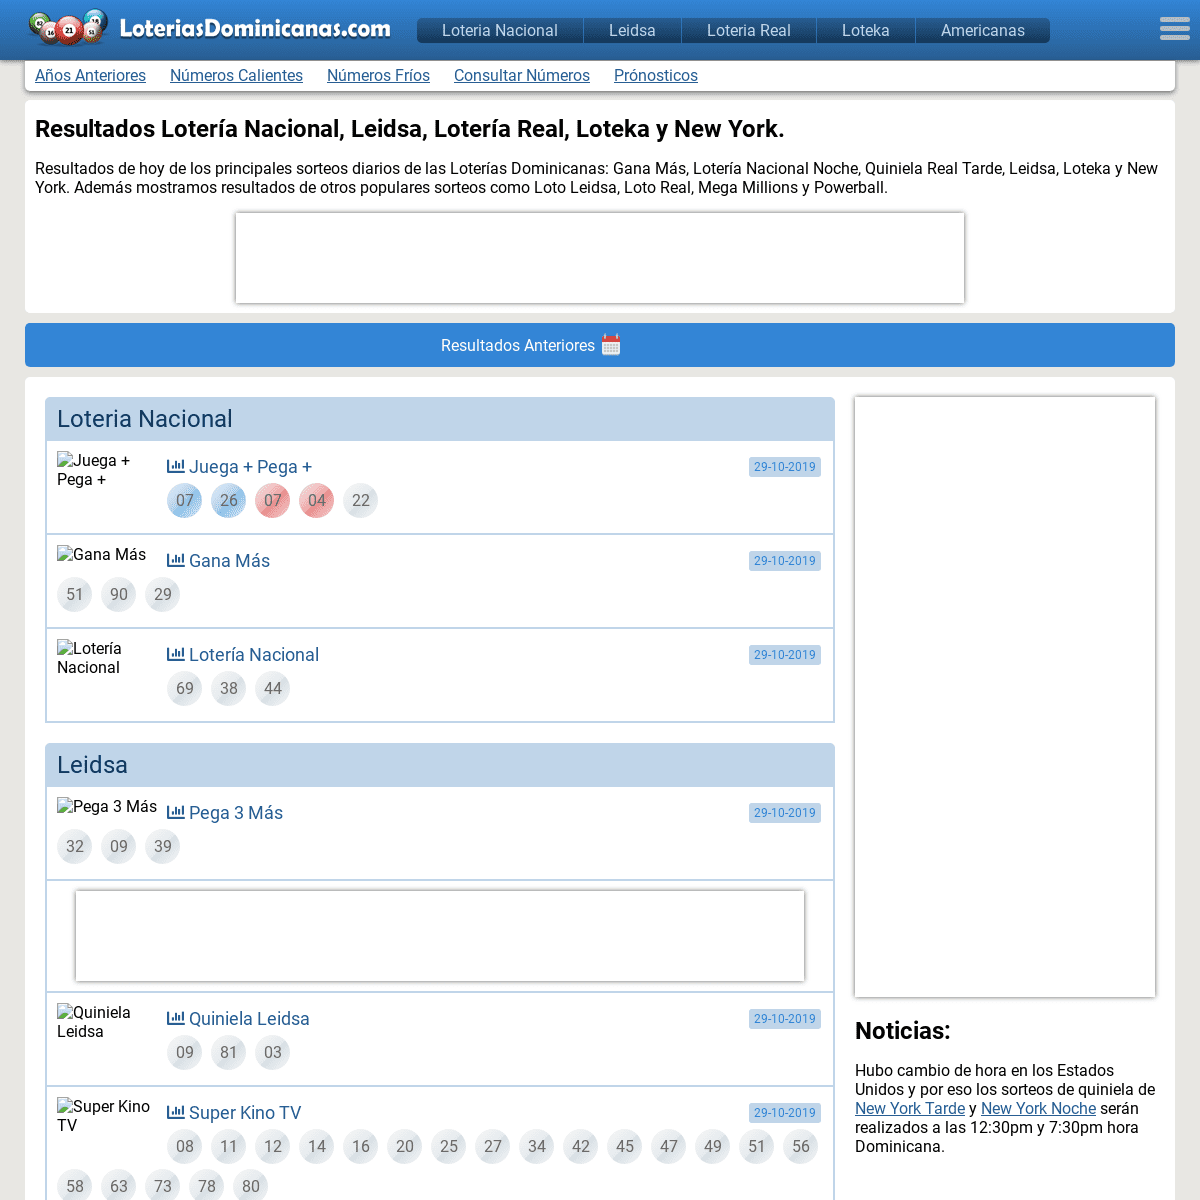 A complete backup of loteriasdominicanas.com